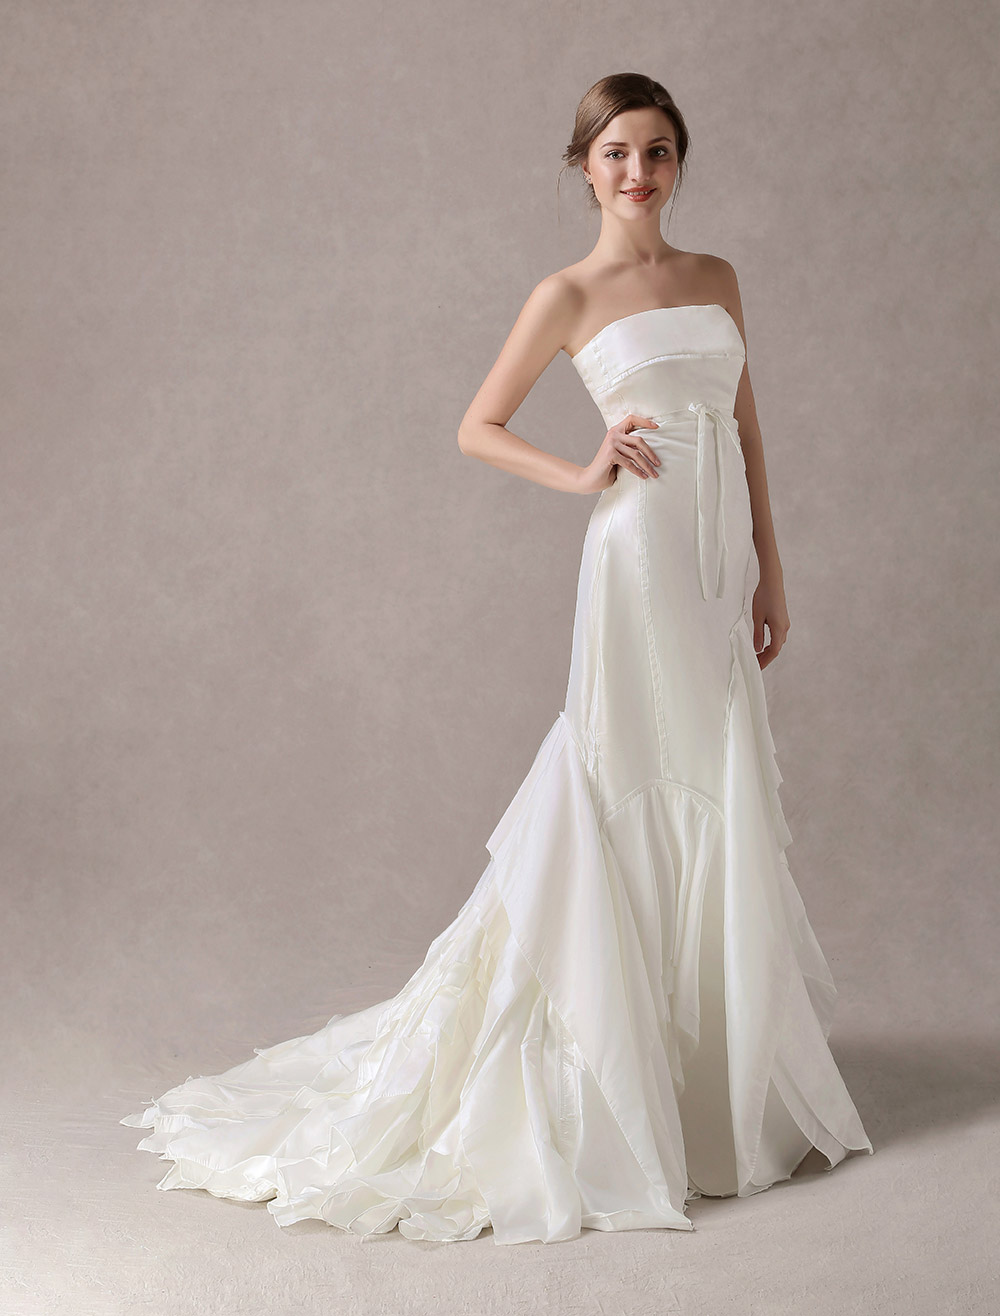 Classical White Satin Mermaid Trumpet Strapless Wedding Dress - Milanoo.com